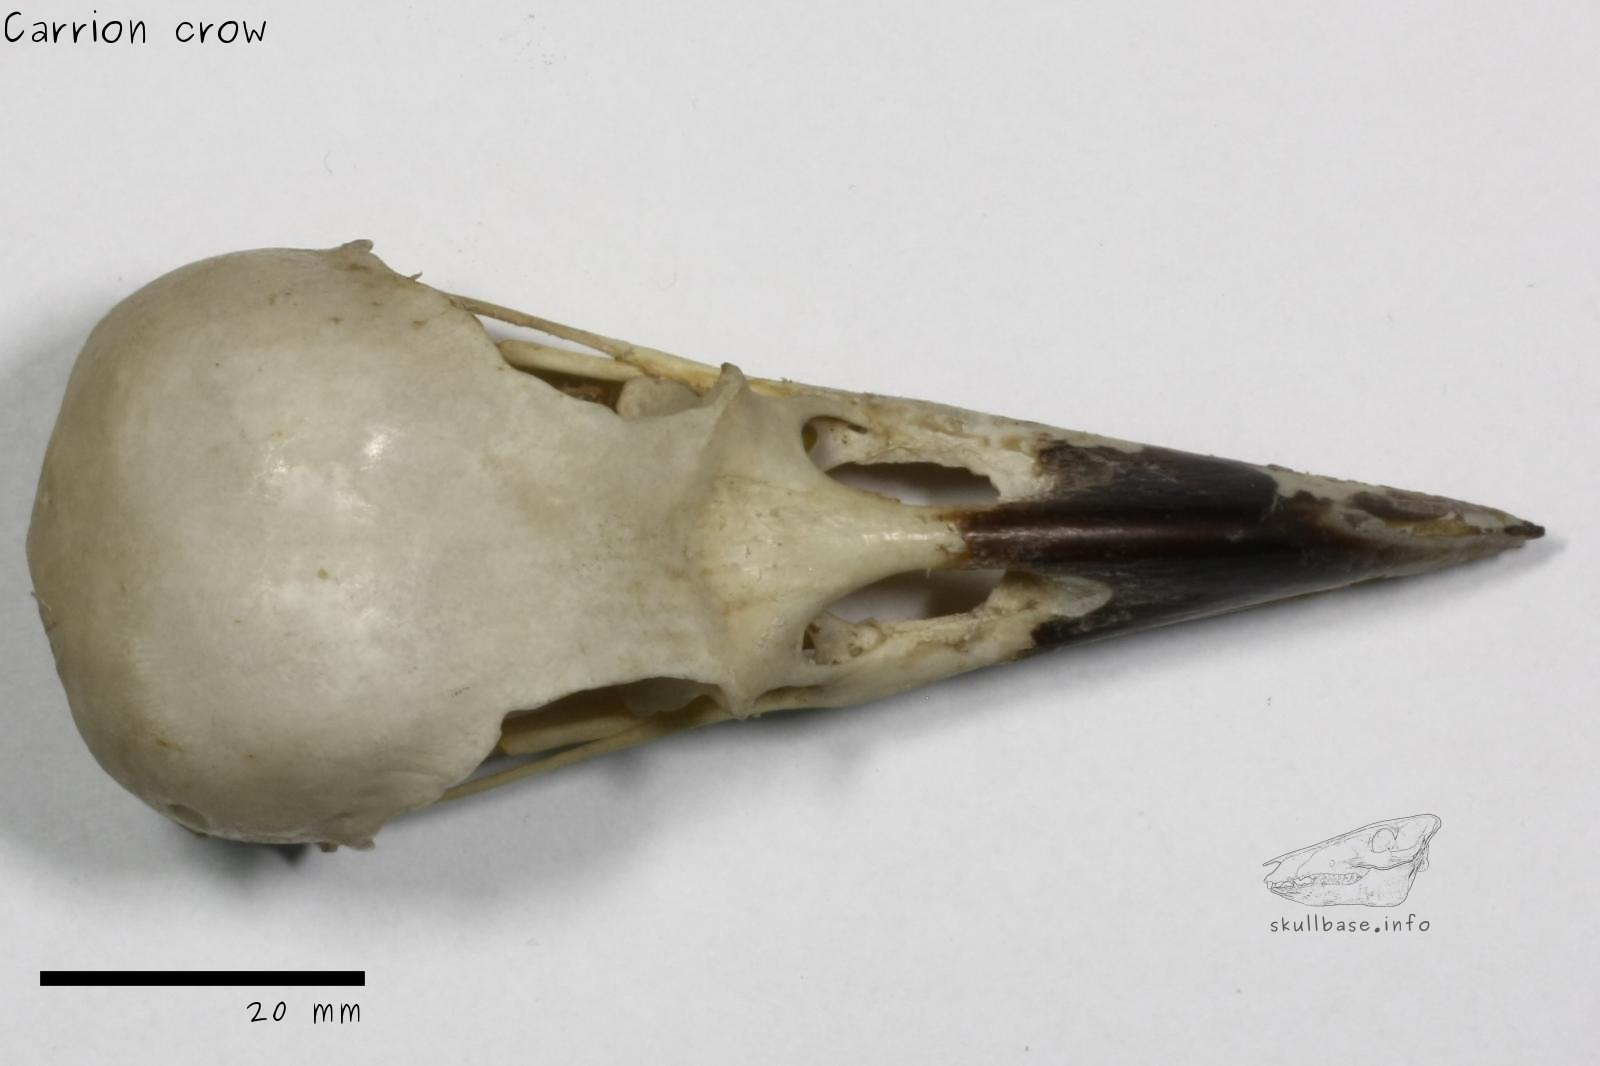 Carrion crow (Corvus corone) skull dorsal view